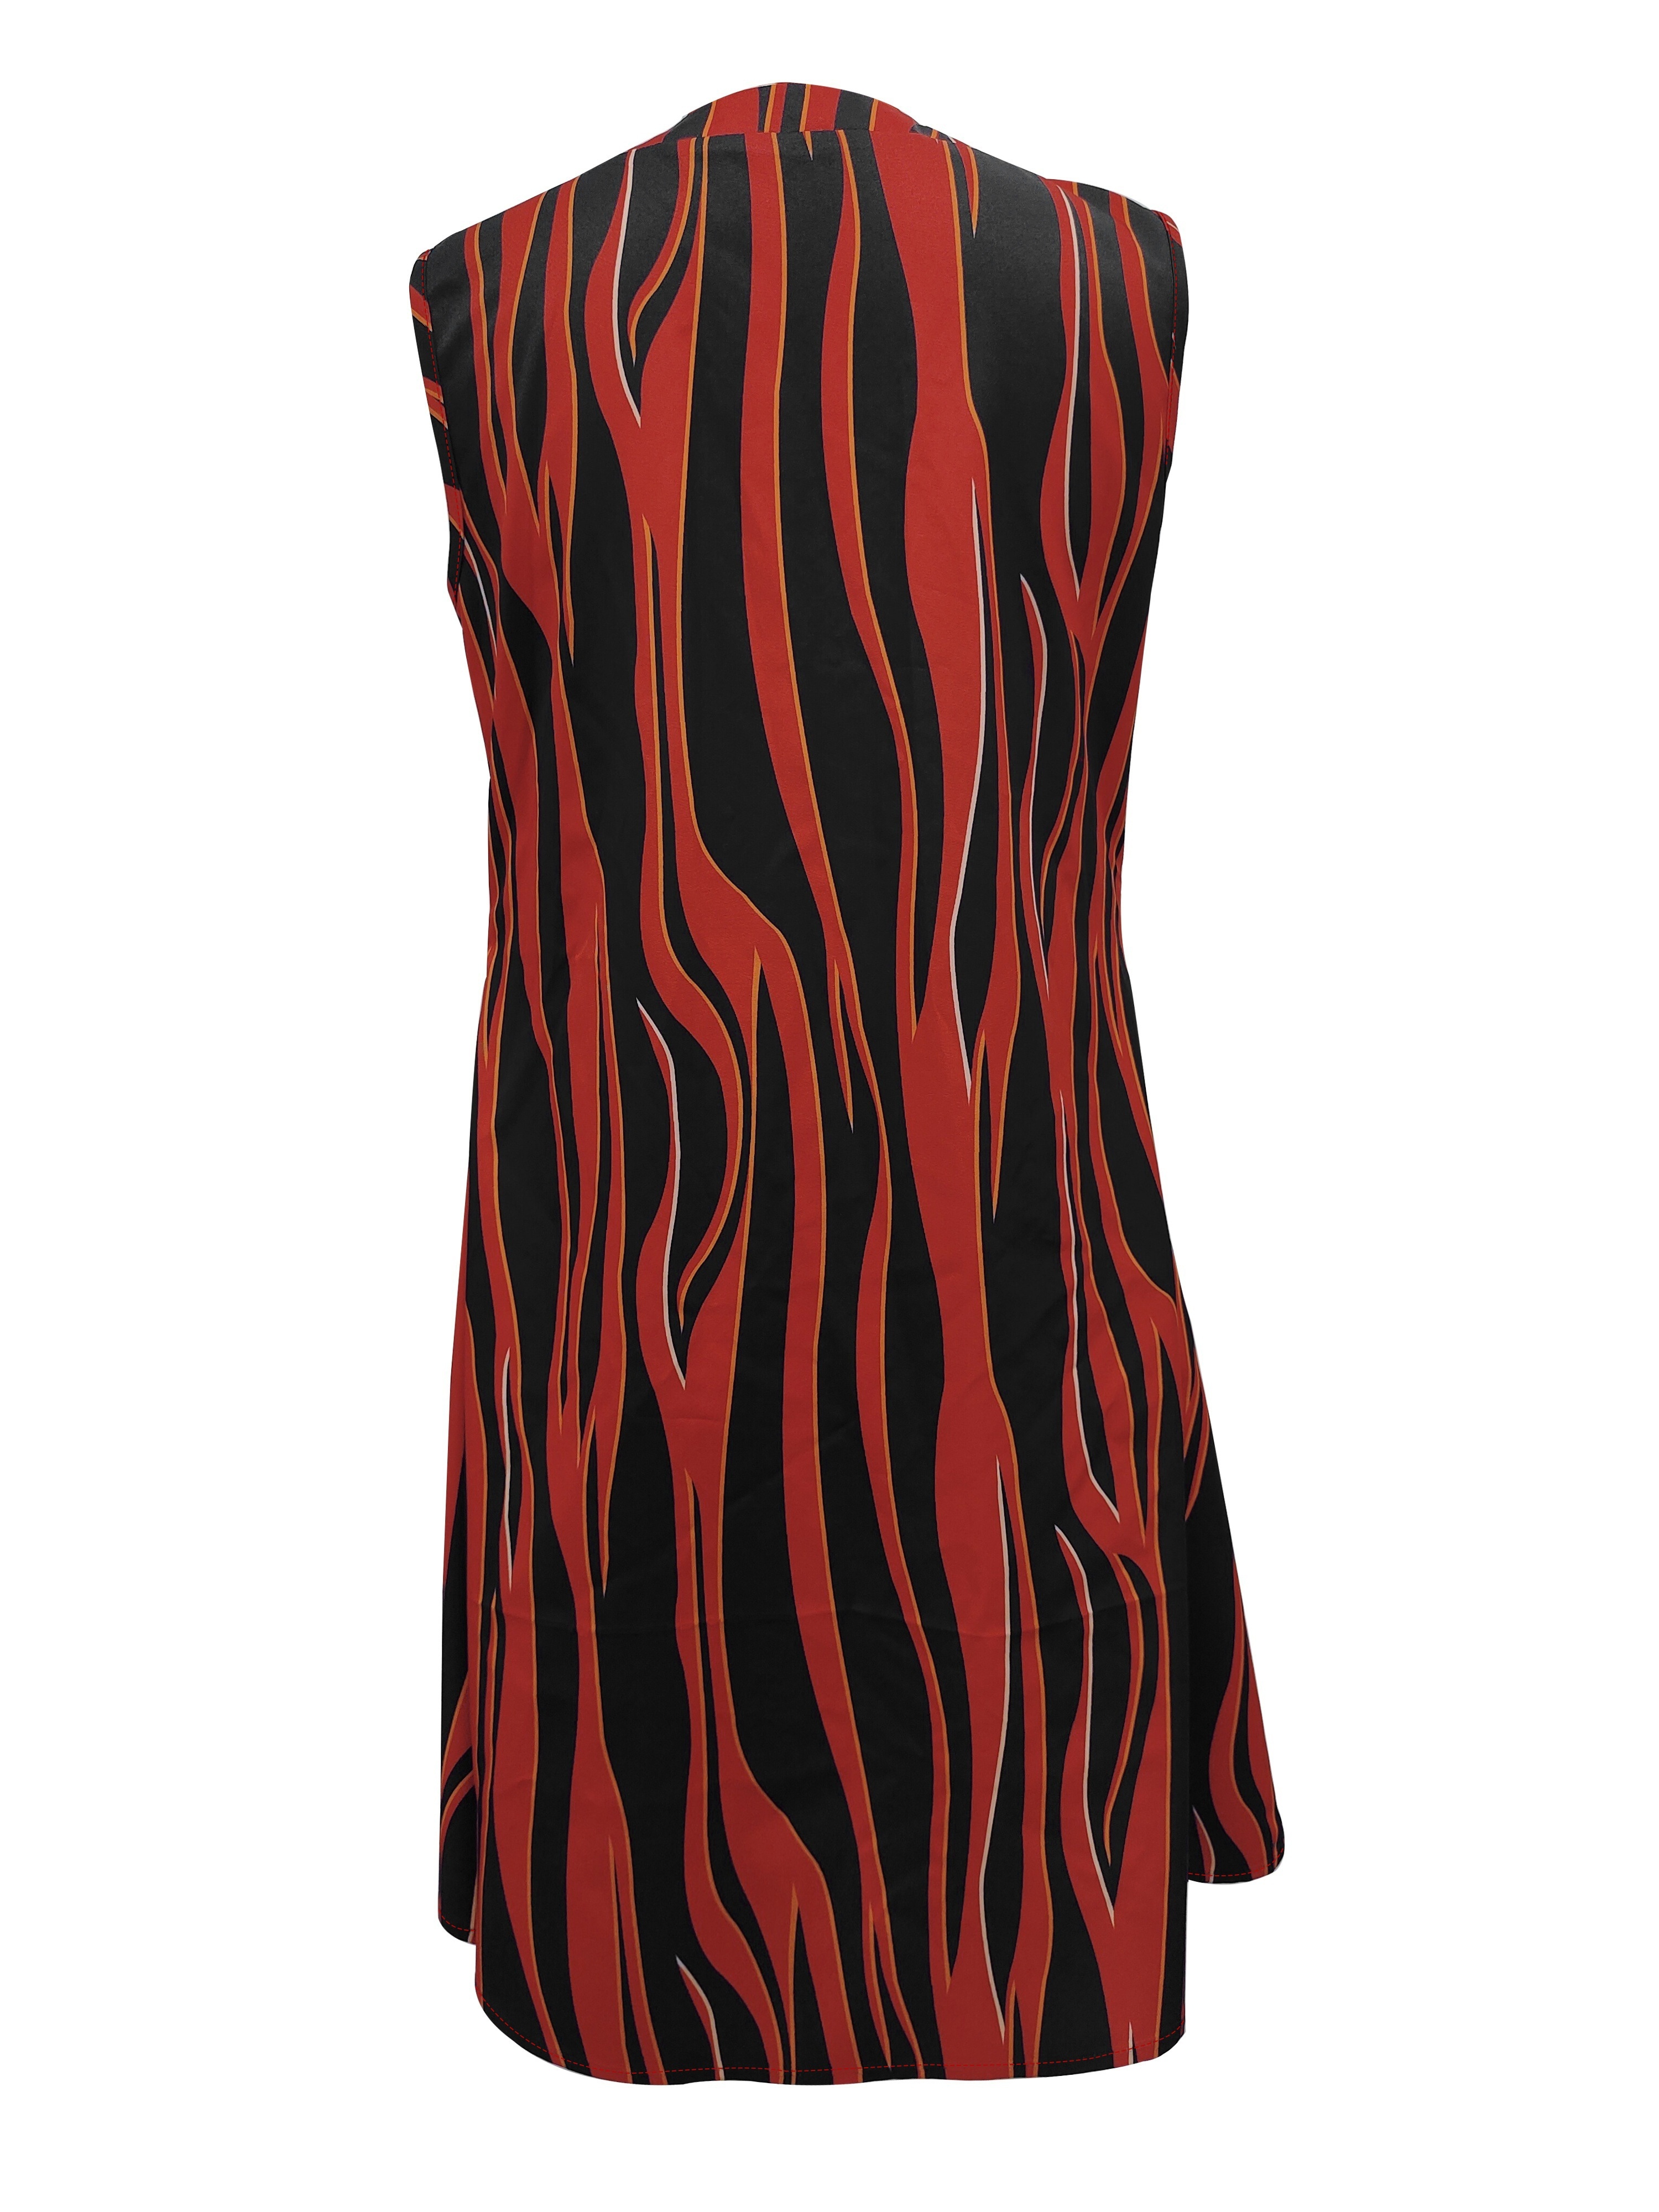 abstract ripple print dress casual v neck sleeveless dress womens clothing details 41